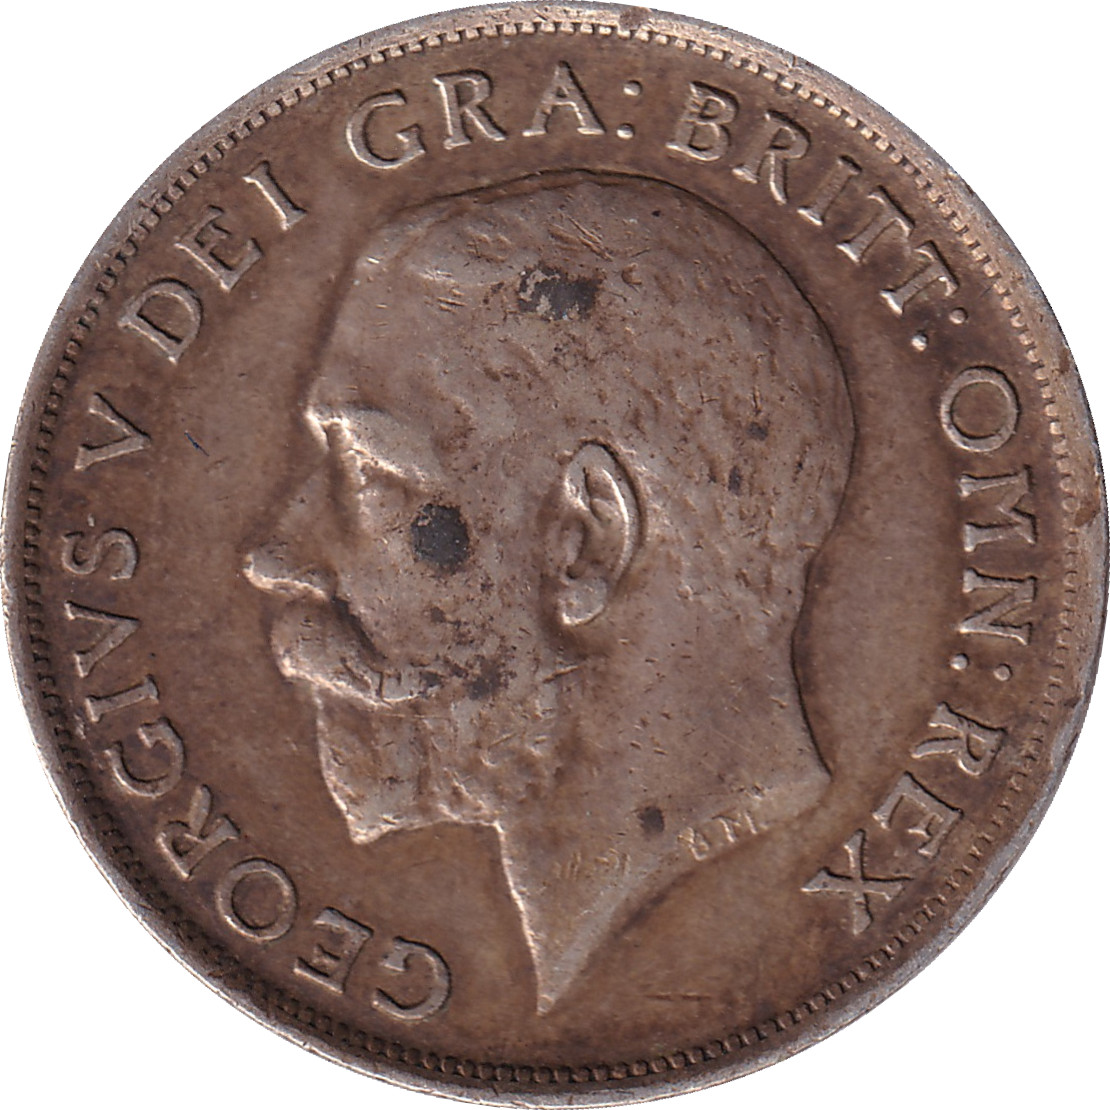 1 shilling - George V - Lion et couronne